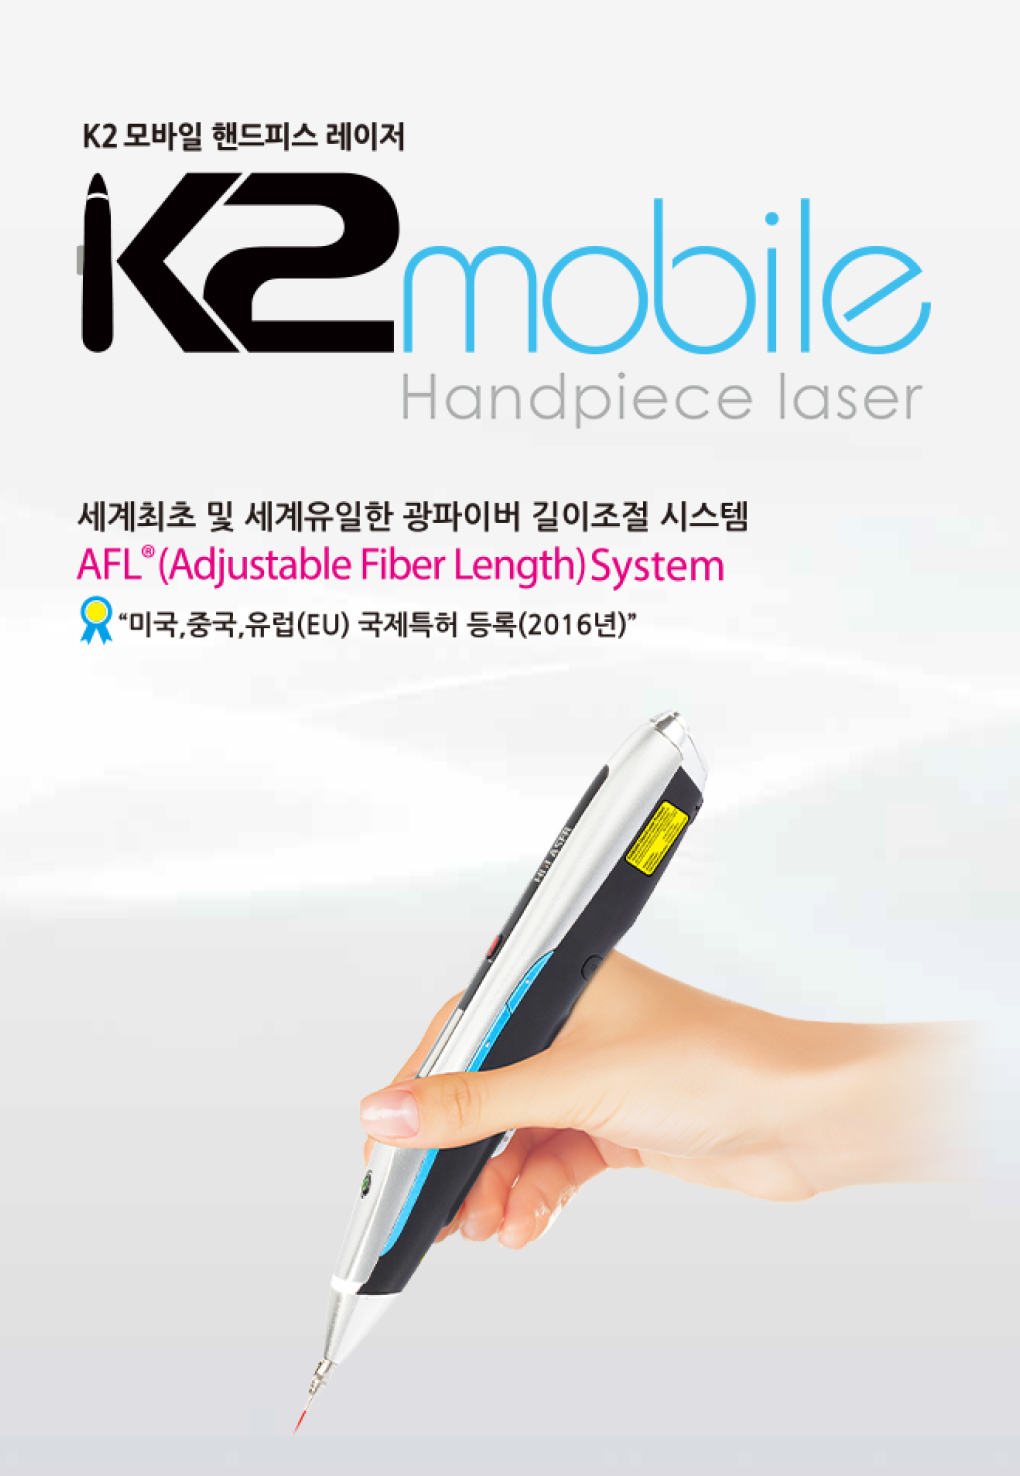 K2 모바일 핸드피스 레이저, 세계최초 및 세계 유일한 광파이버 길이조절 시스템 AFL(Adjustable Fiber Length) System / 미국, 중국, 유럽 국제특허 등록(2016년)